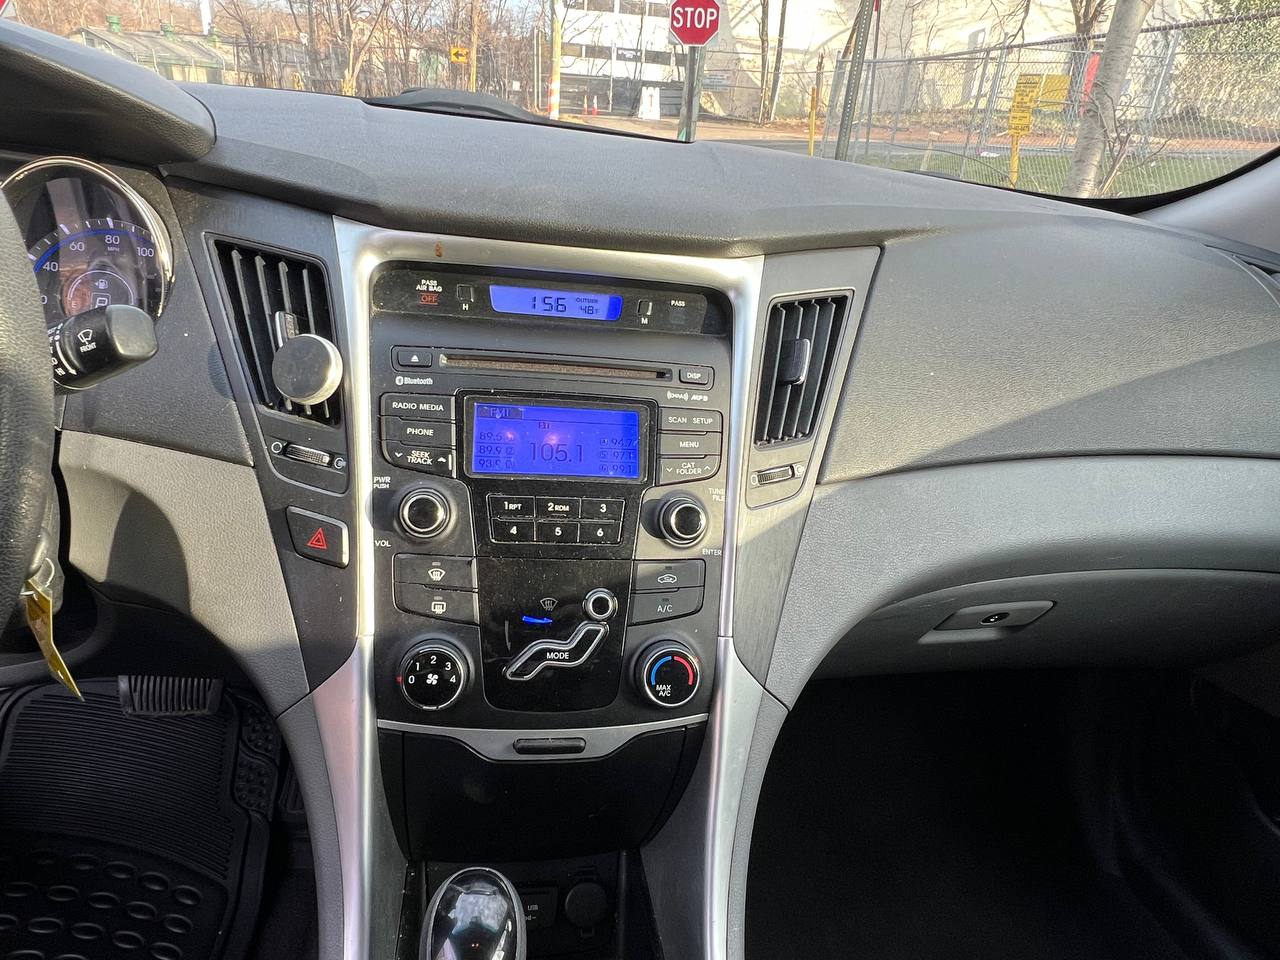 Used - Hyundai Sonata GLS  for sale in Staten Island NY